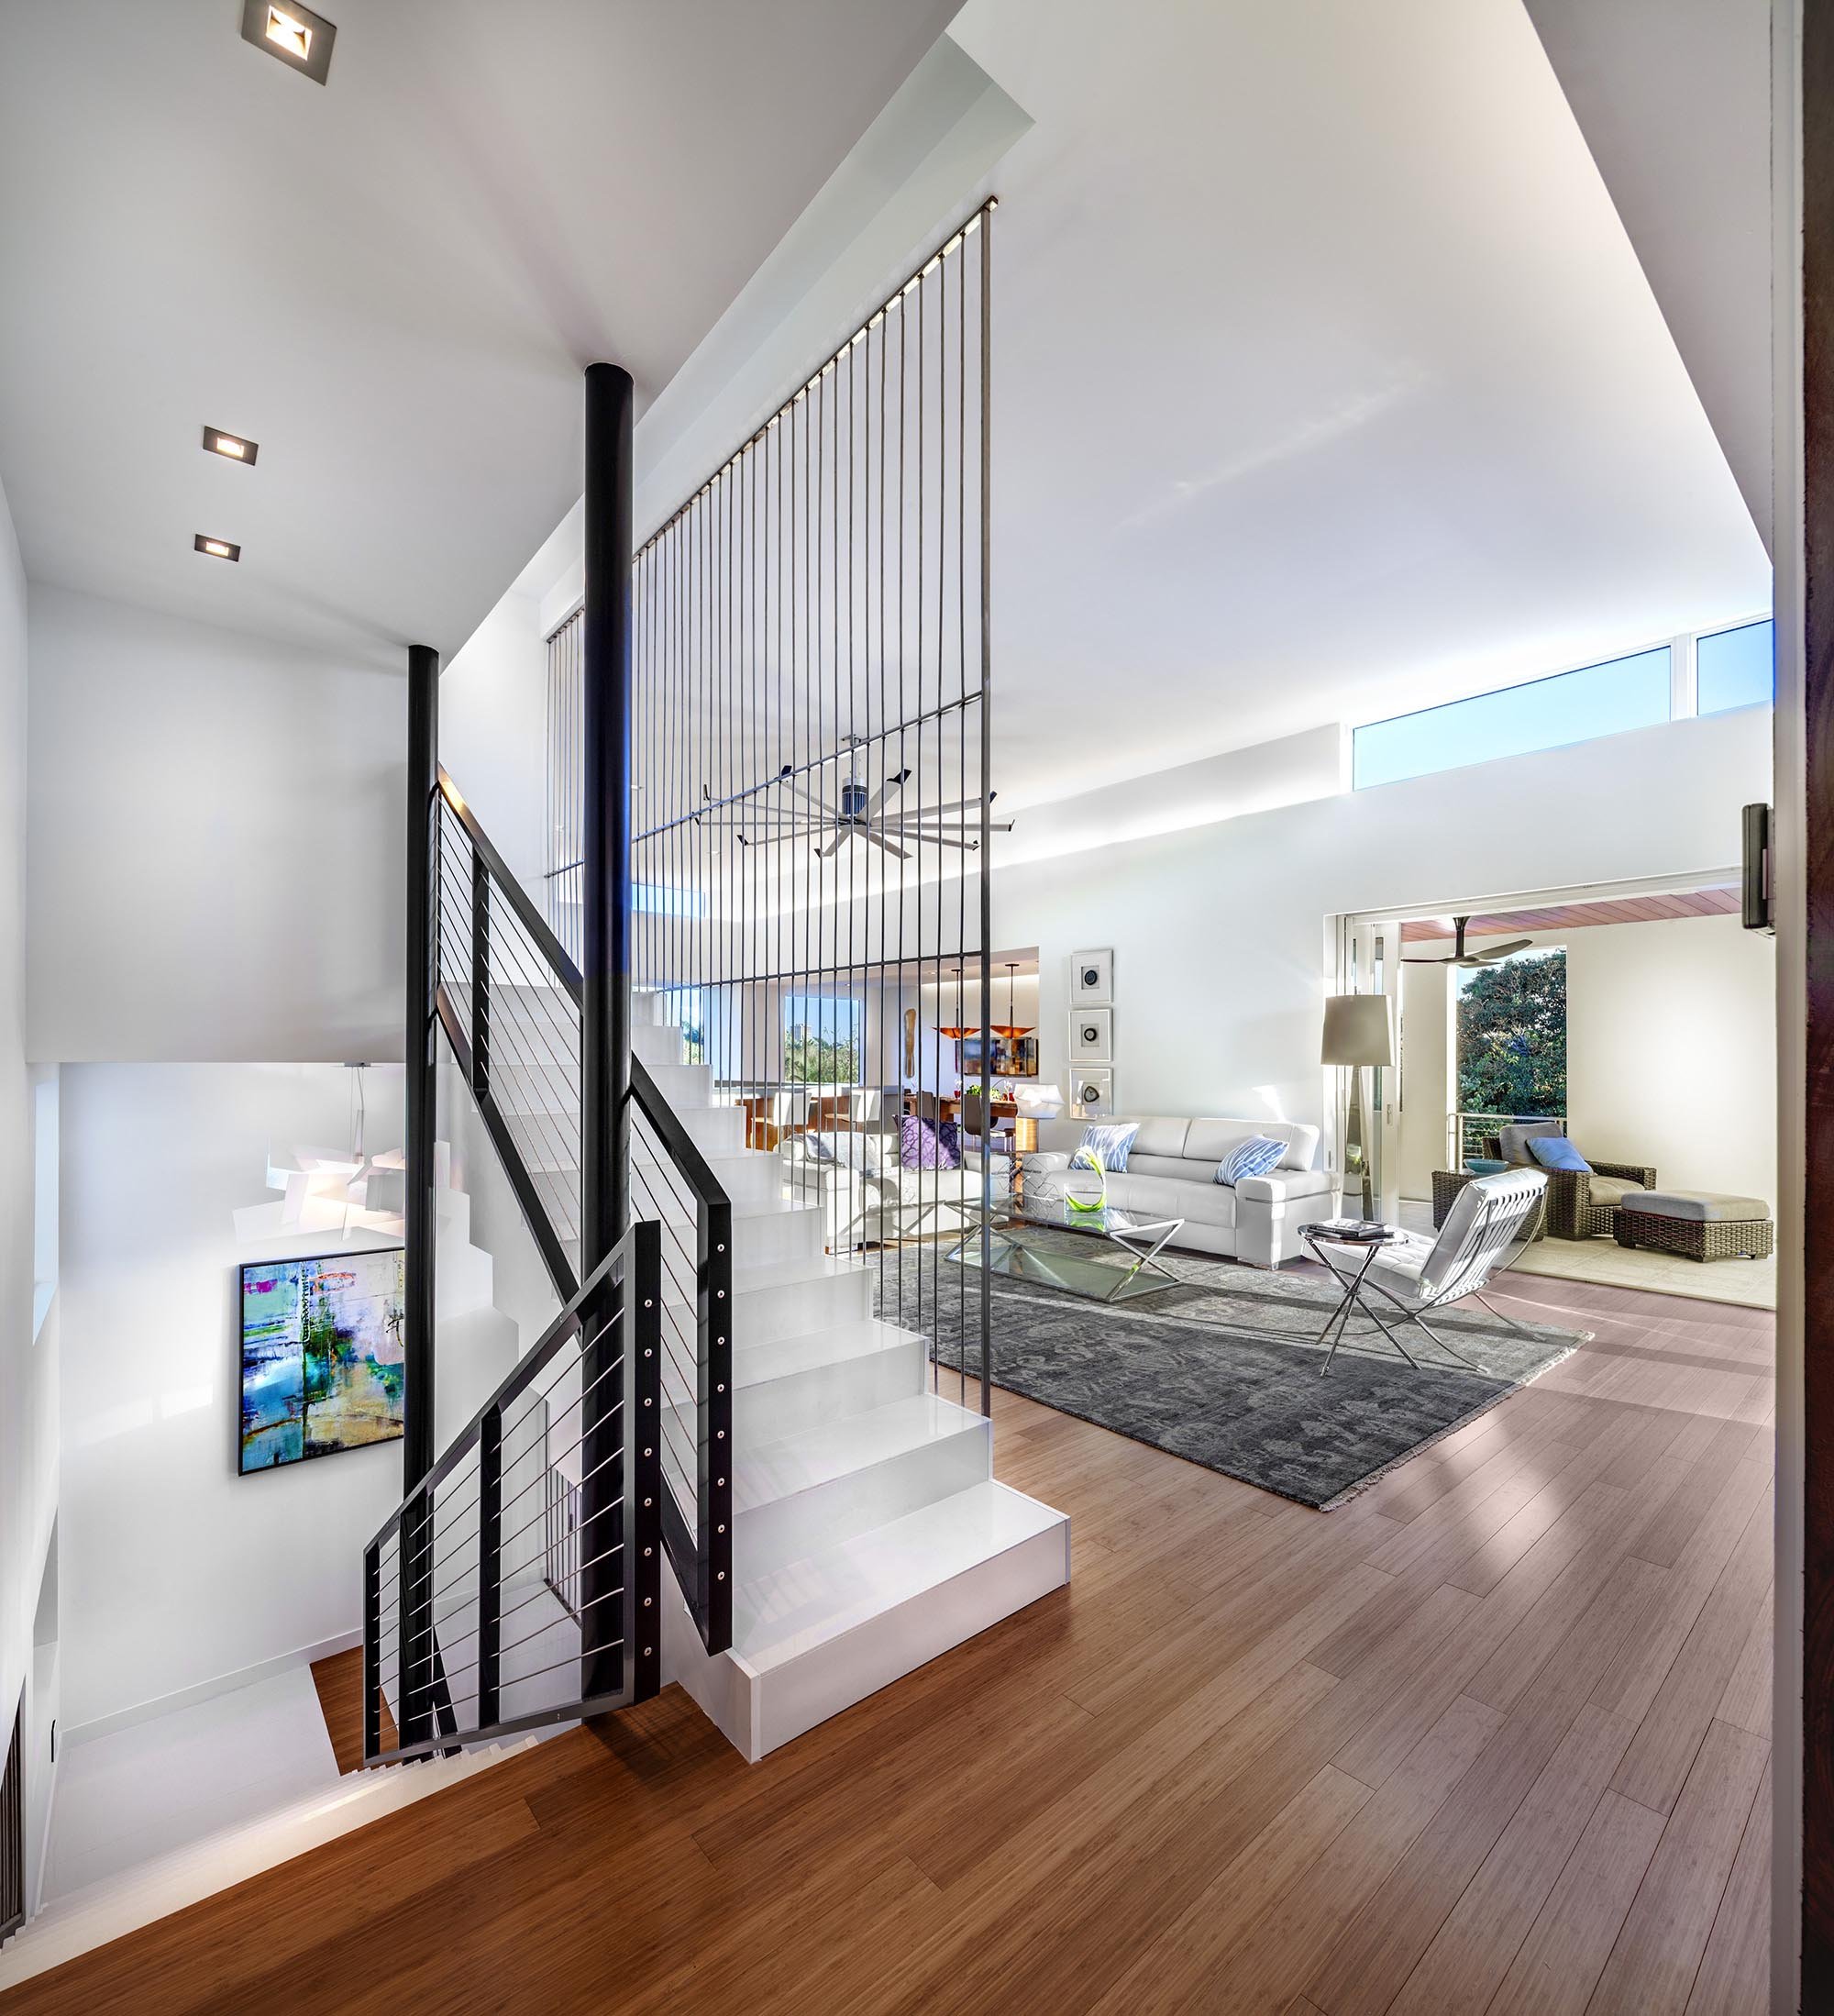 TipTop House Stairs and Living Room Sarasota Architect Jonathan Parks.jpg